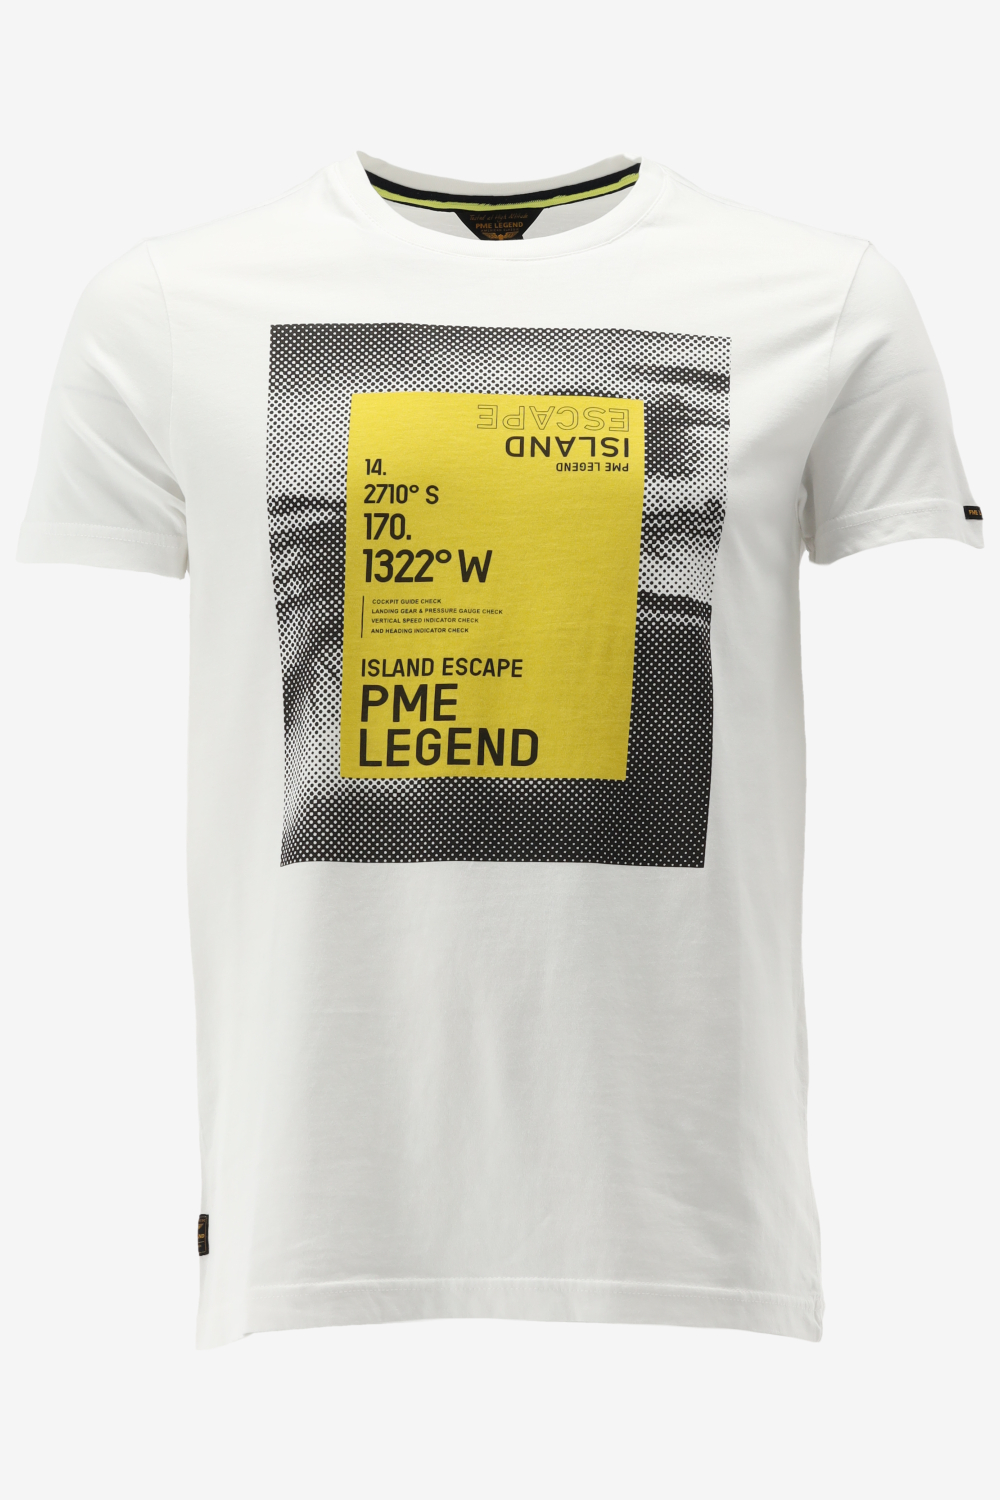 Eigendom zeker Hassy Herenkleding T-shirts & Polo's Pme Legend T-shirt - Bergmans Fashion Outlet  - Webshop | GRATIS VERZENDING!